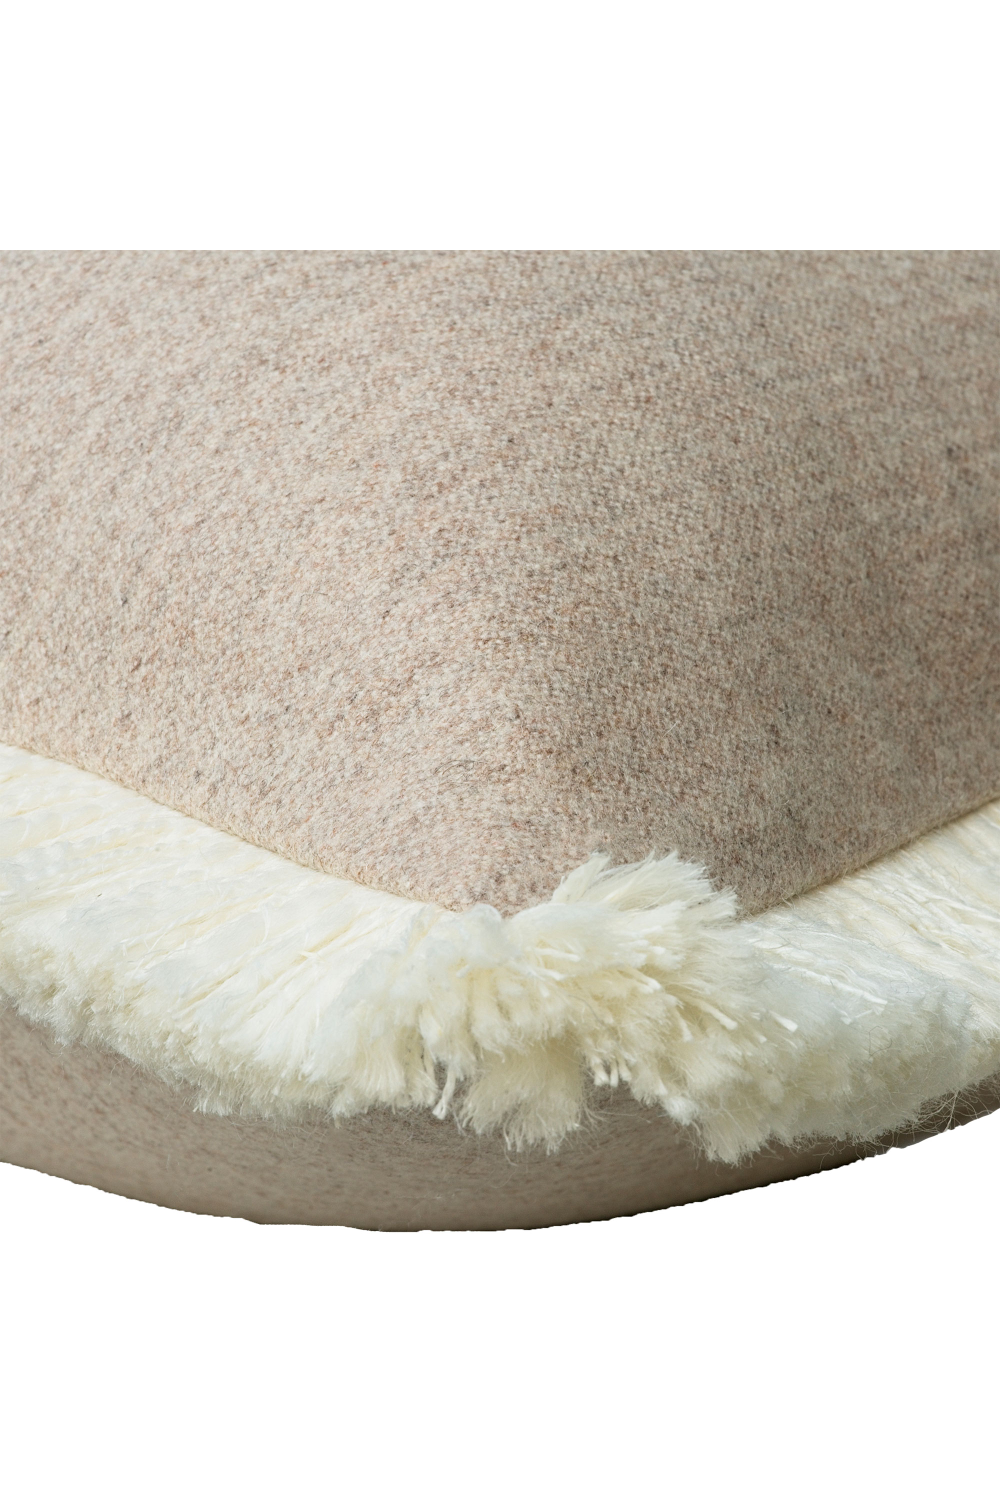 Camel Tone Rectangular Cushion | Andrew Martin York | Oro.com